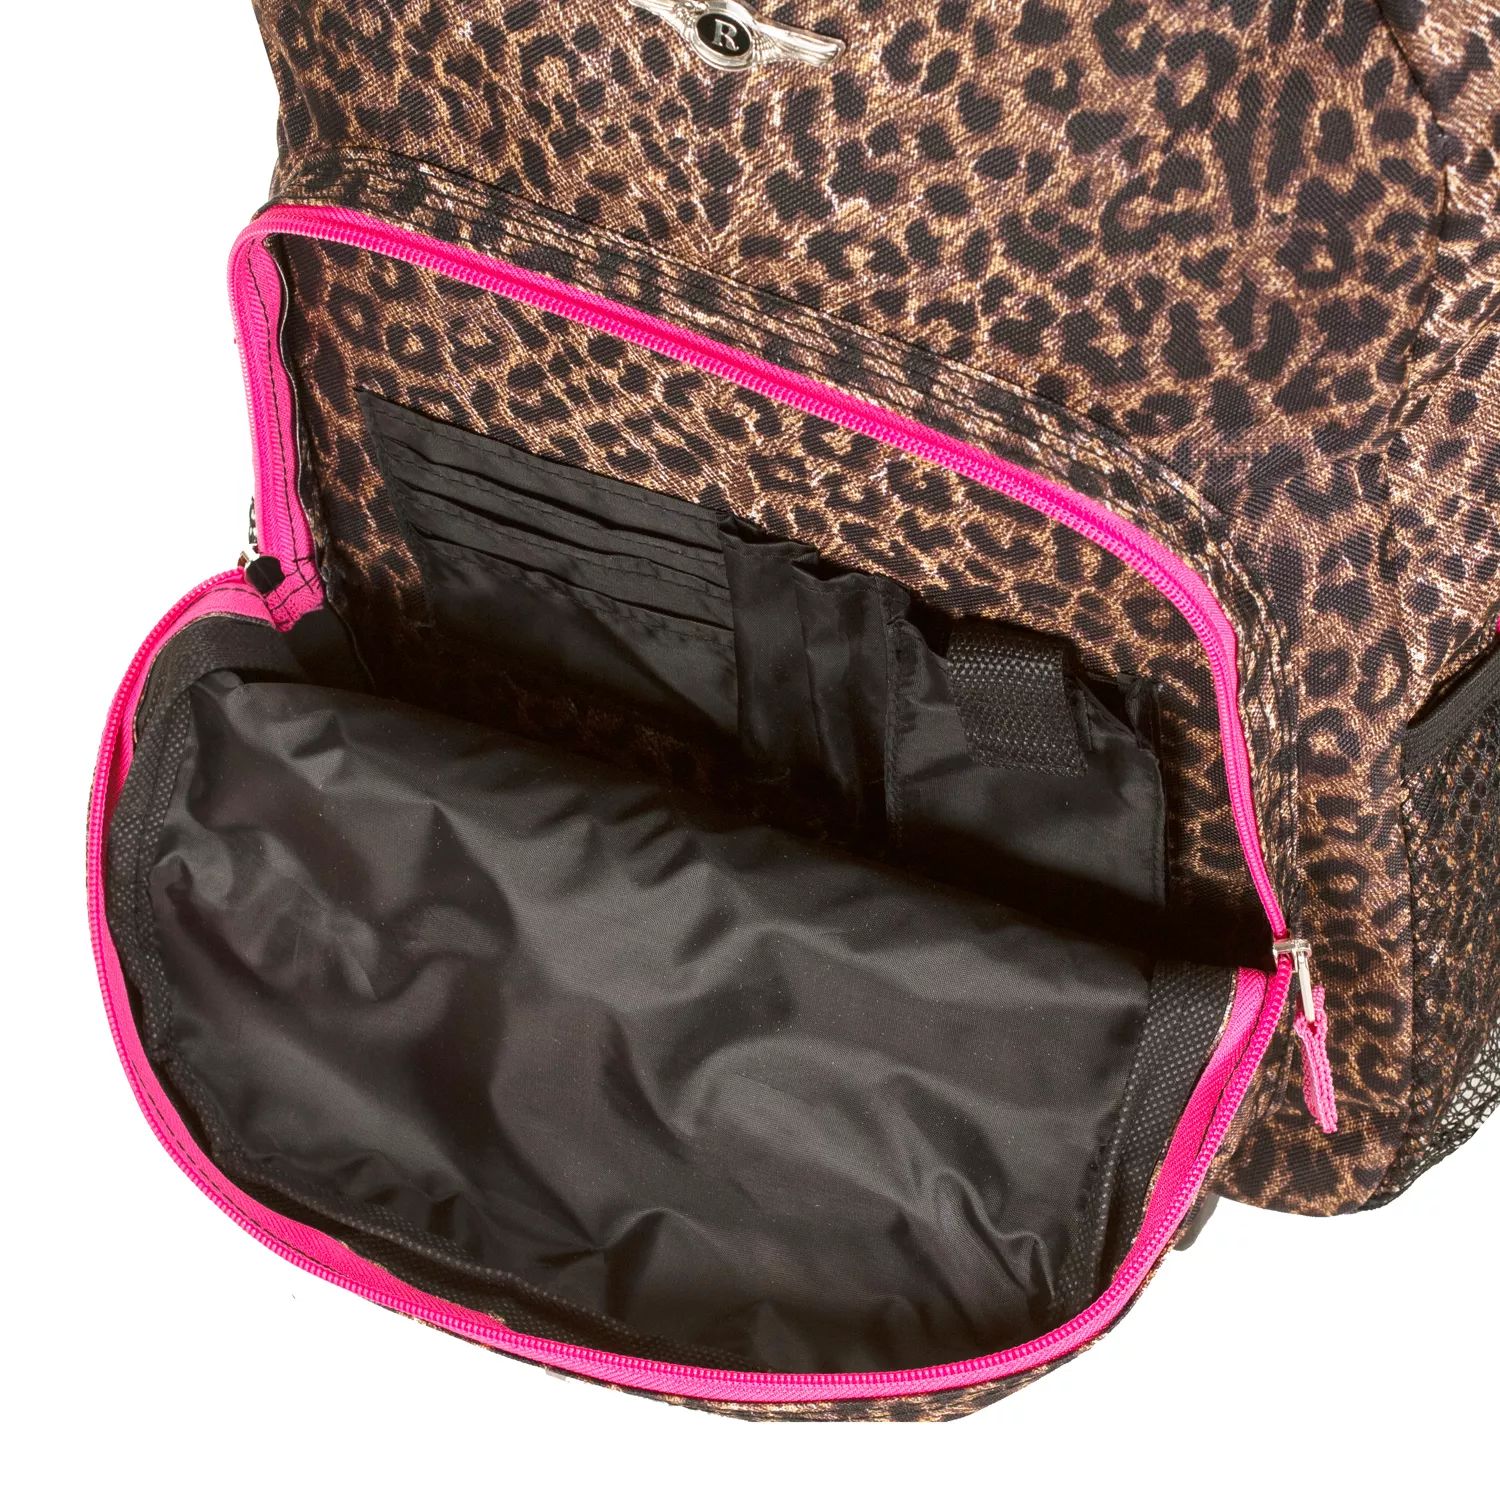 Рюкзак Rockland на колесиках 17 дюймов рюкзак для девочек на колесиках школьный рюкзак на колесиках с принтом в виде кошки